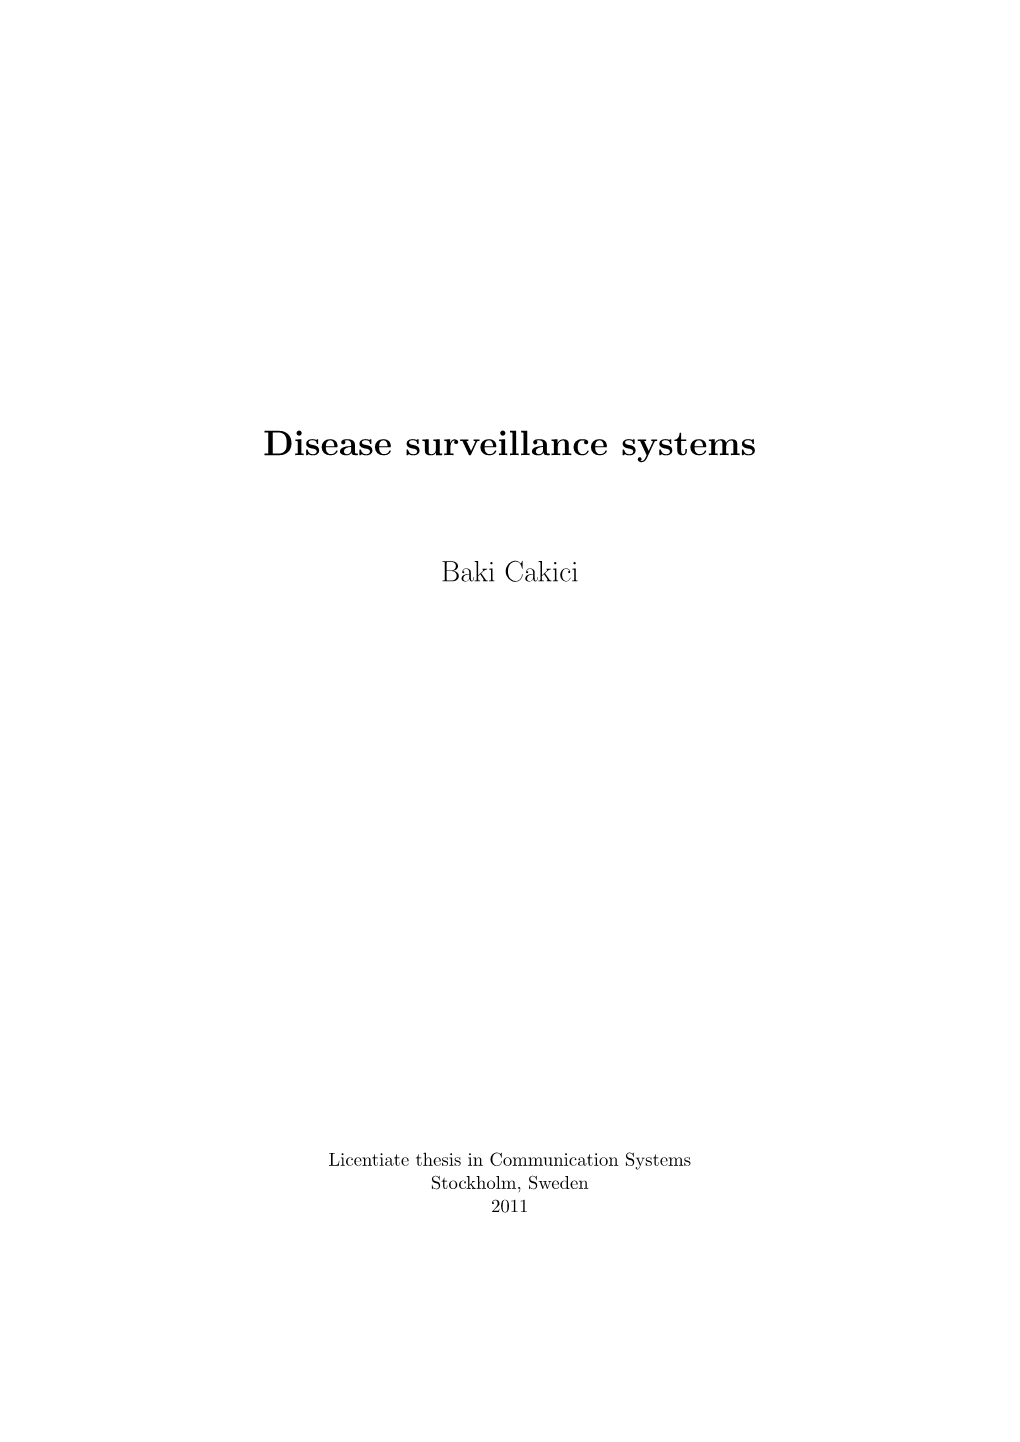 Disease Surveillance Systems